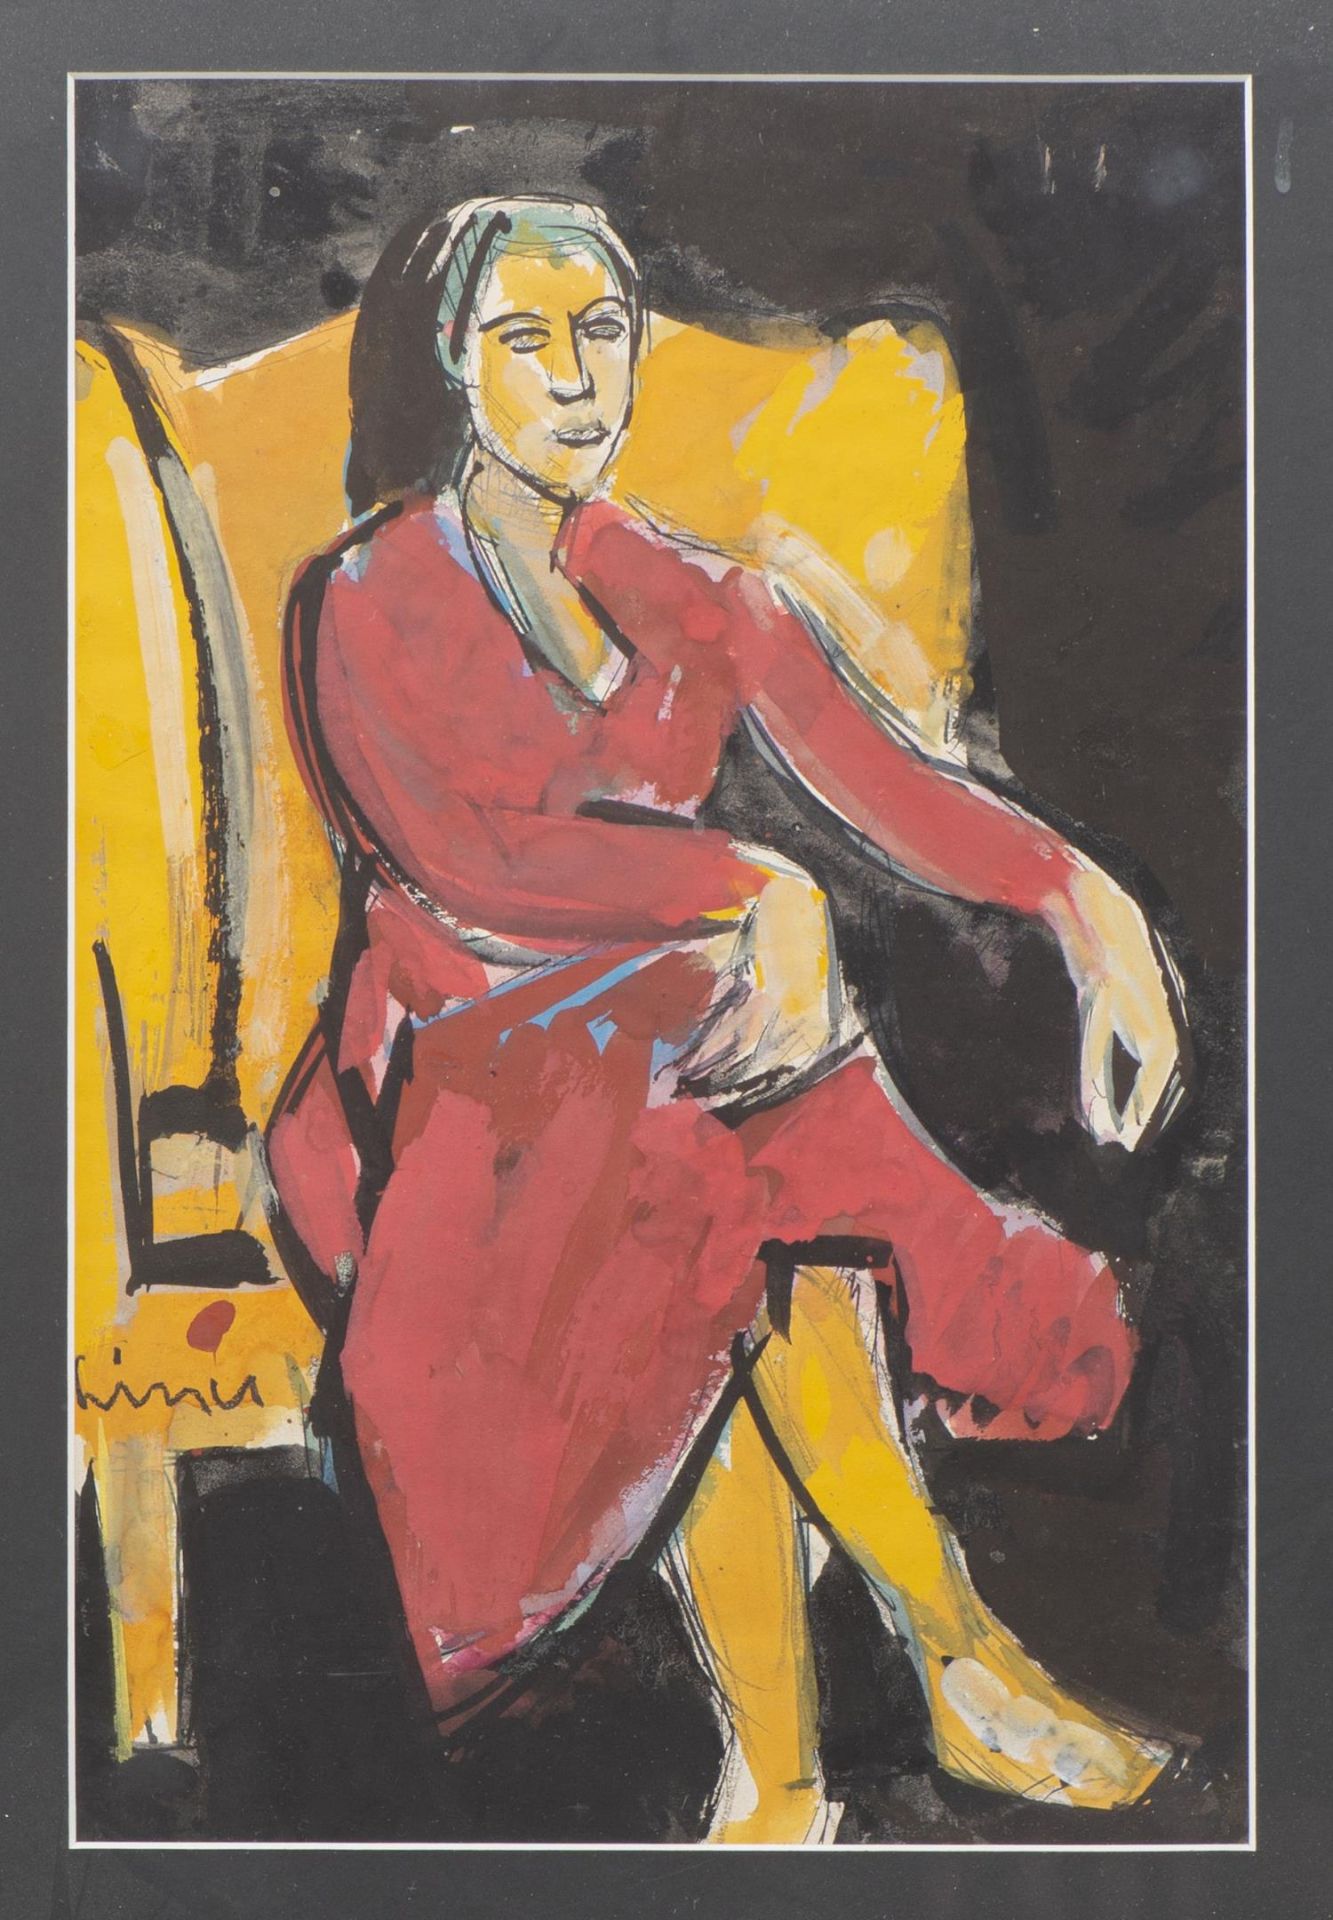 Carl LINER (1914-1997) "Fauteuil jaune", 1951